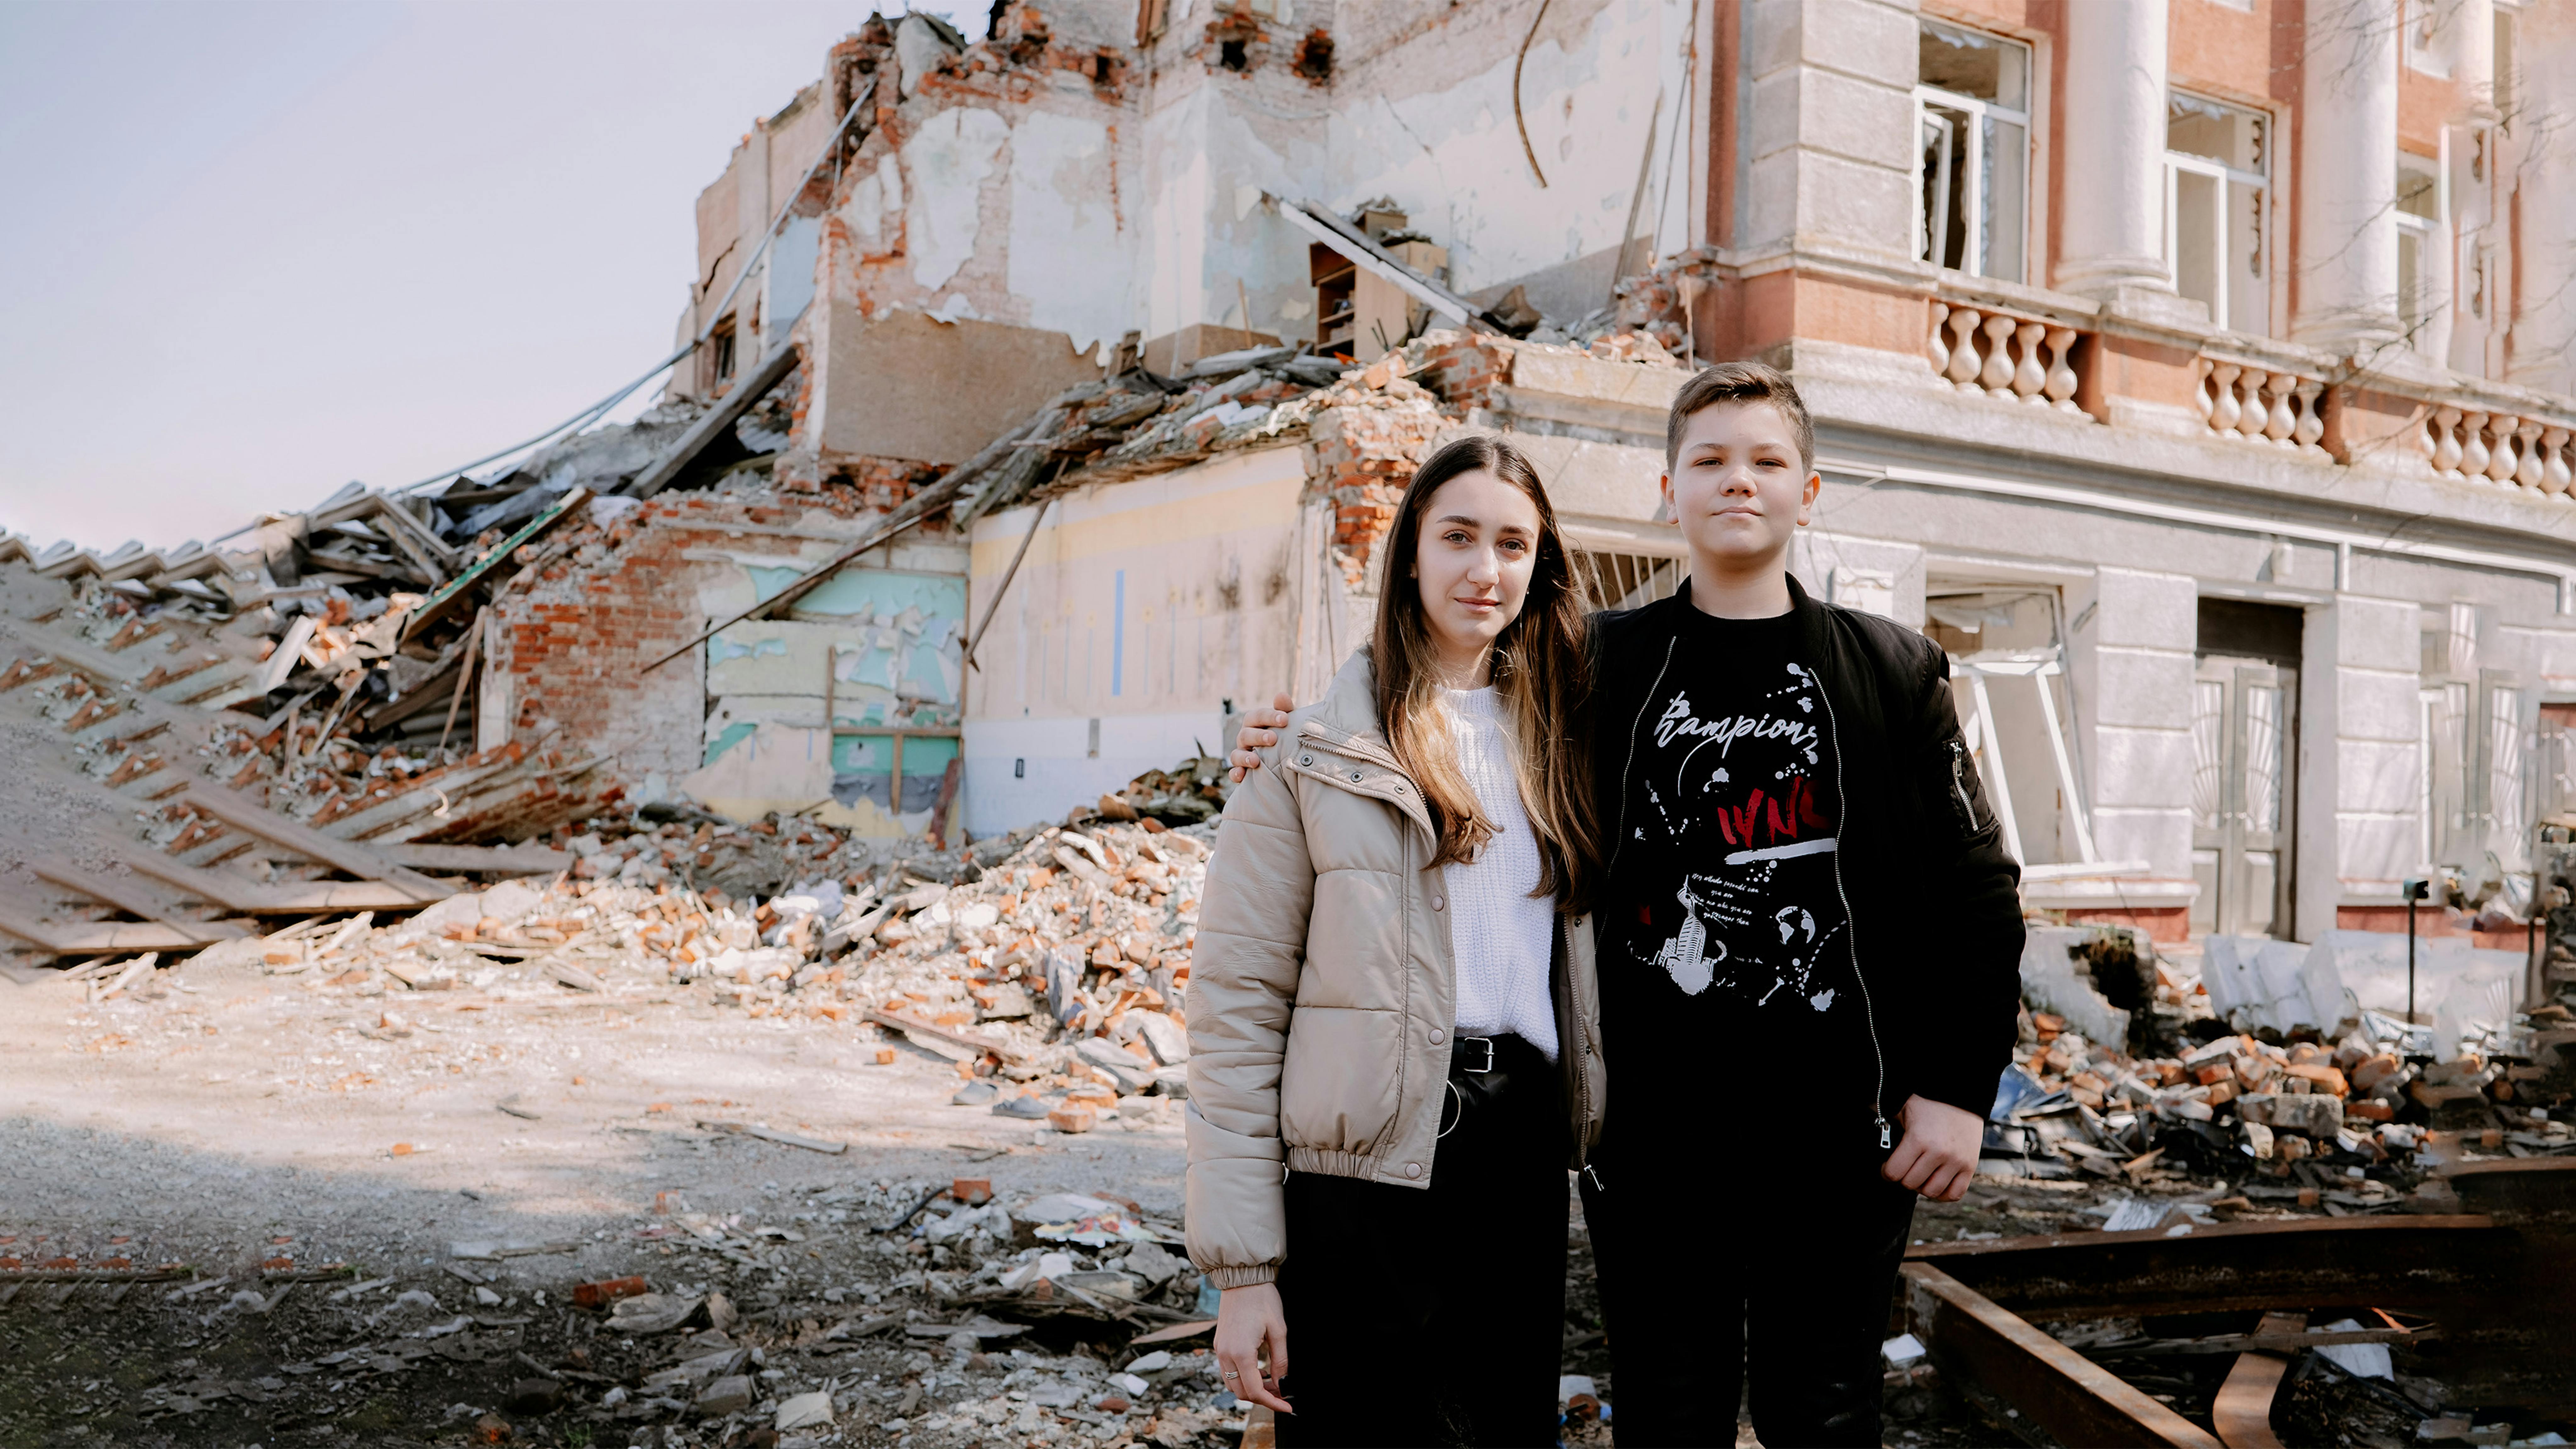 Ucraina - I fratelli Anastasia (17) e Mykhailo (12) davanti alla scuola distrutta a Eskhar.